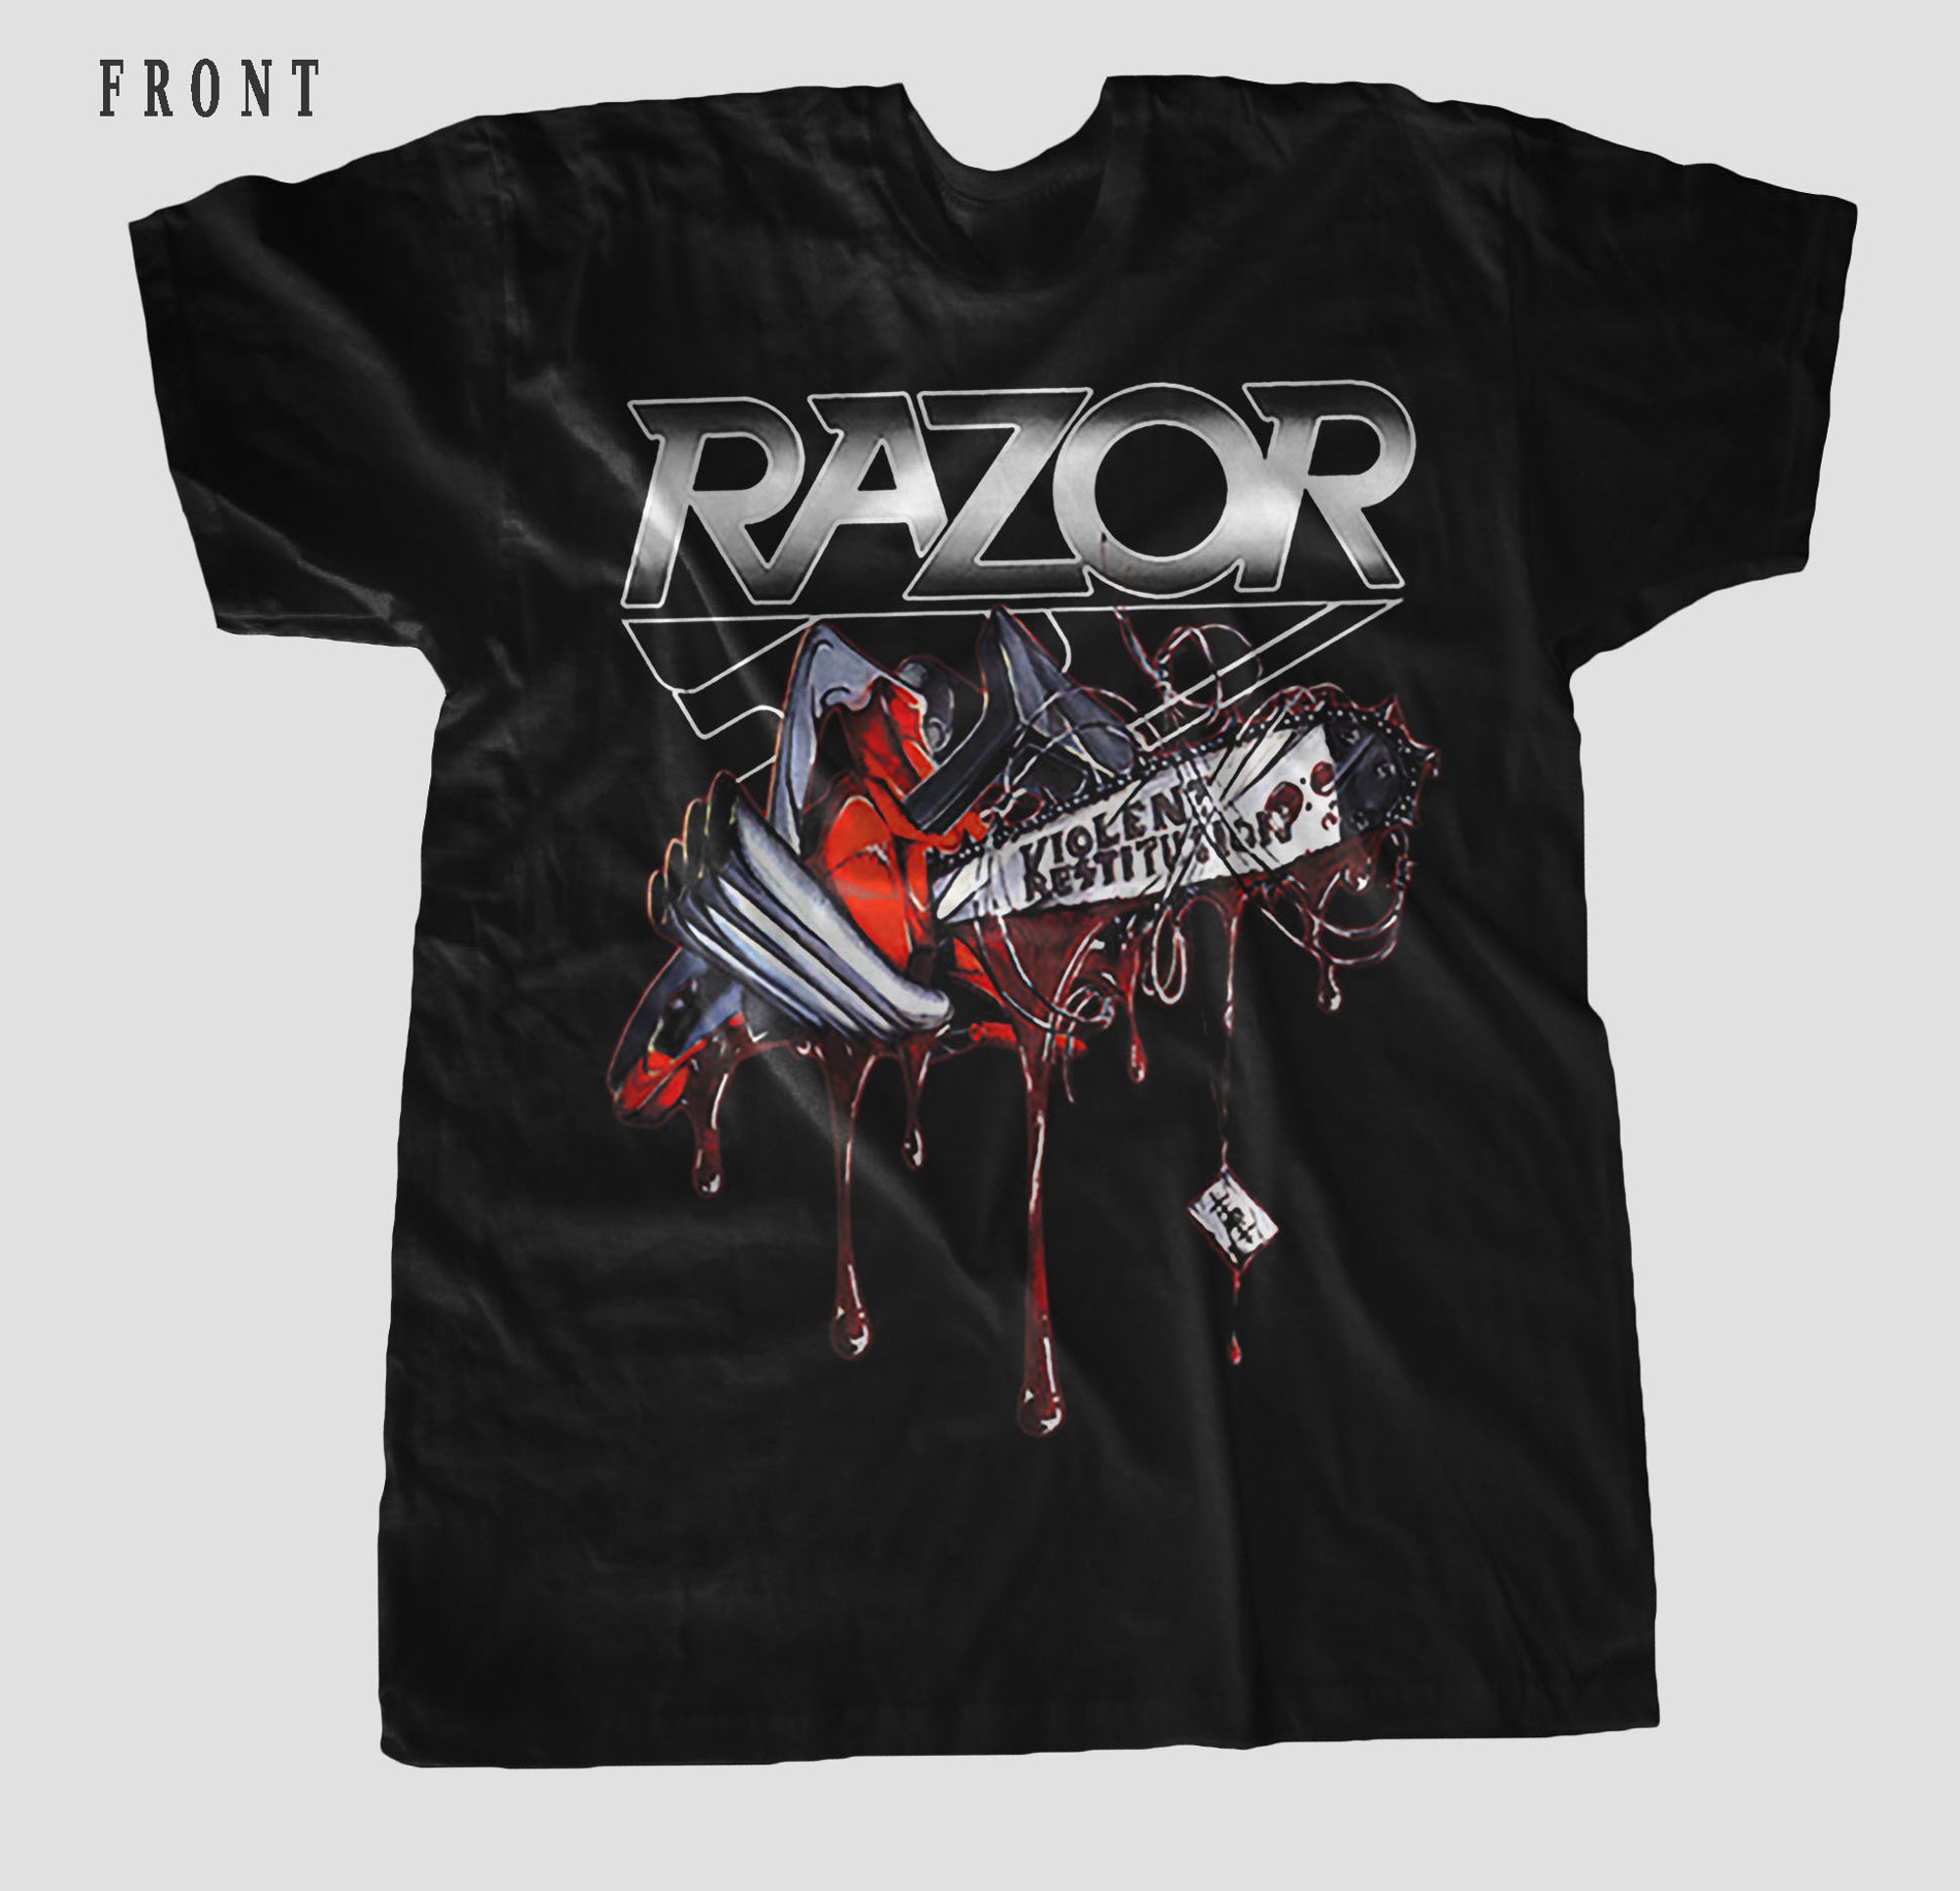 RAZOR - Violent Restitution t shirt